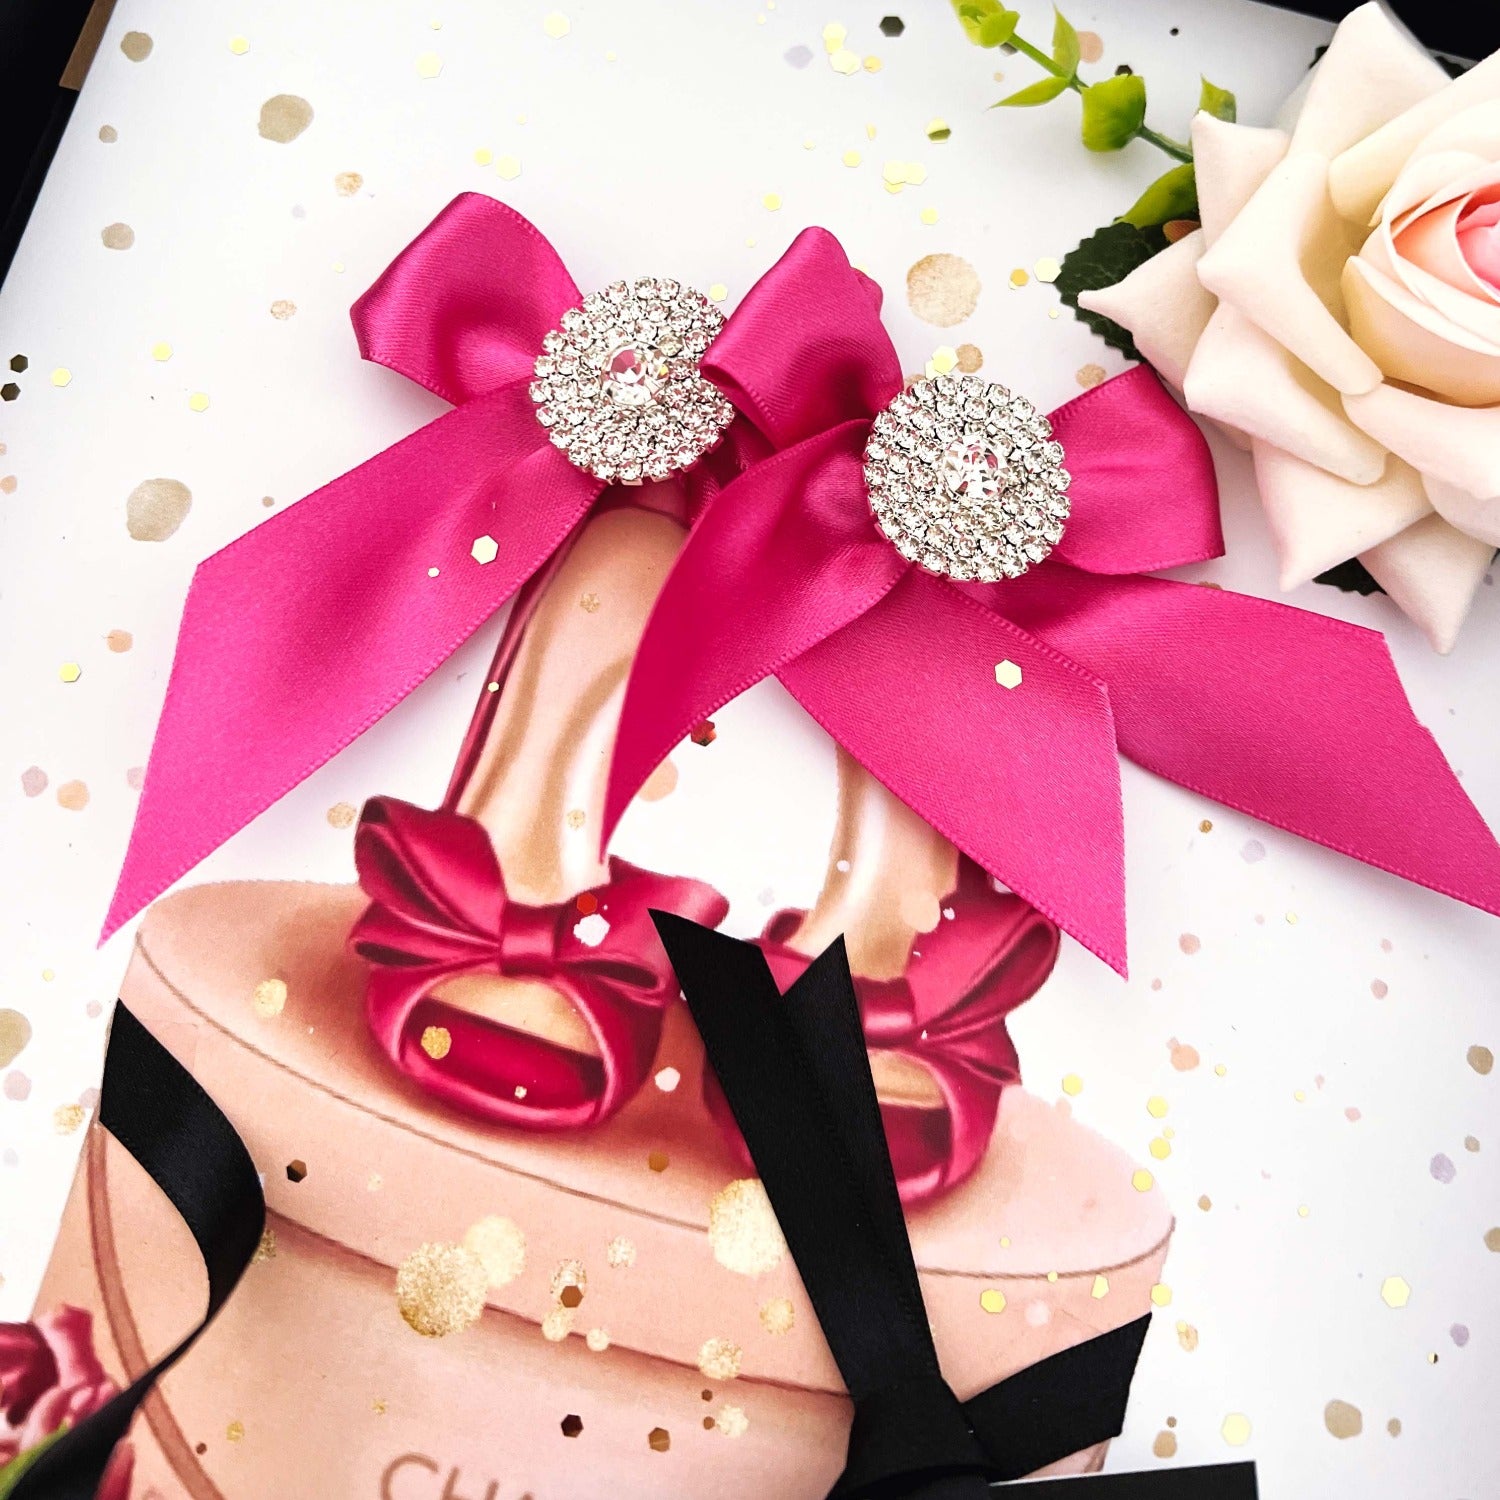 Chanel High Heels Shoe Scented Card Design - cerise pink high heels, pink bows, diamantes, velvet roses